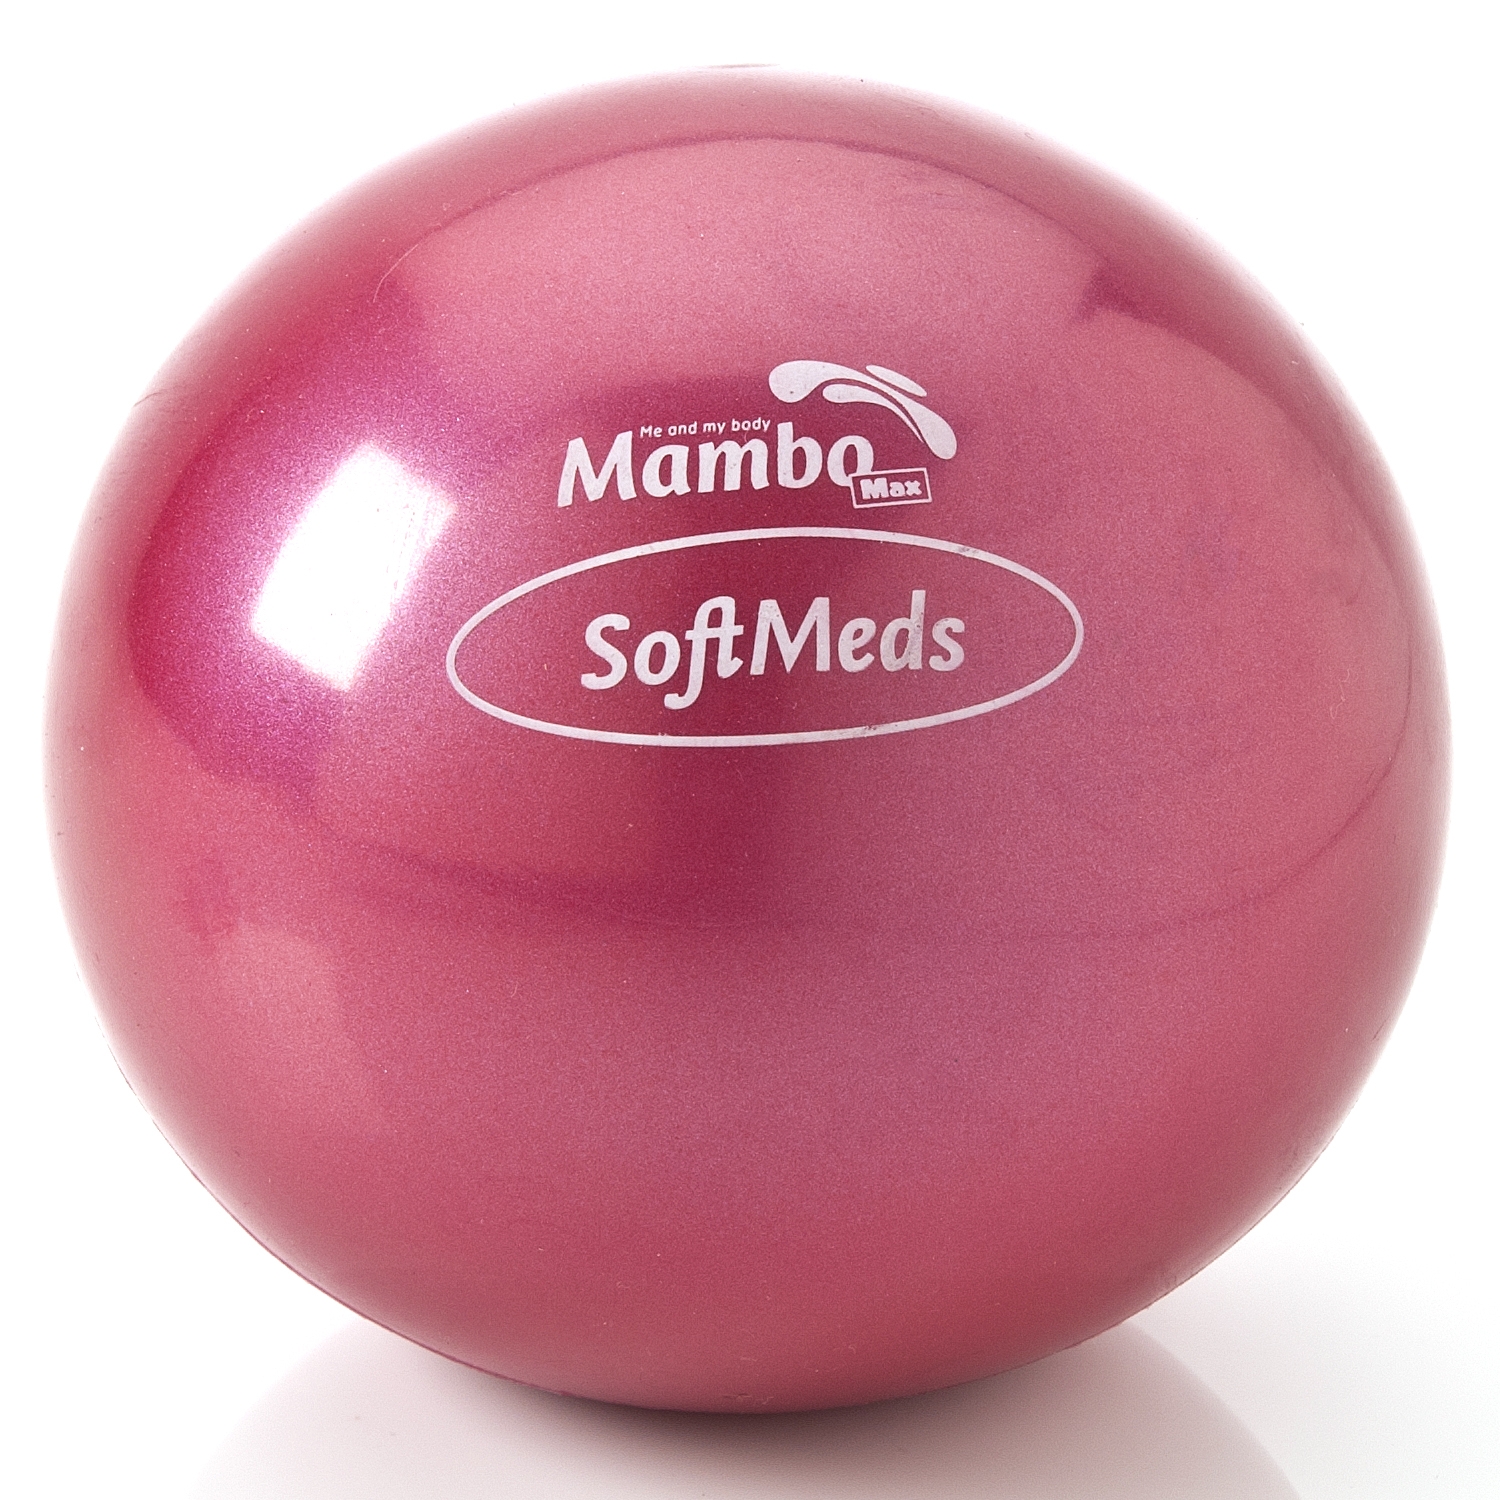 Softmed gewichtsbal - Mambo - 1,5 kg - rood